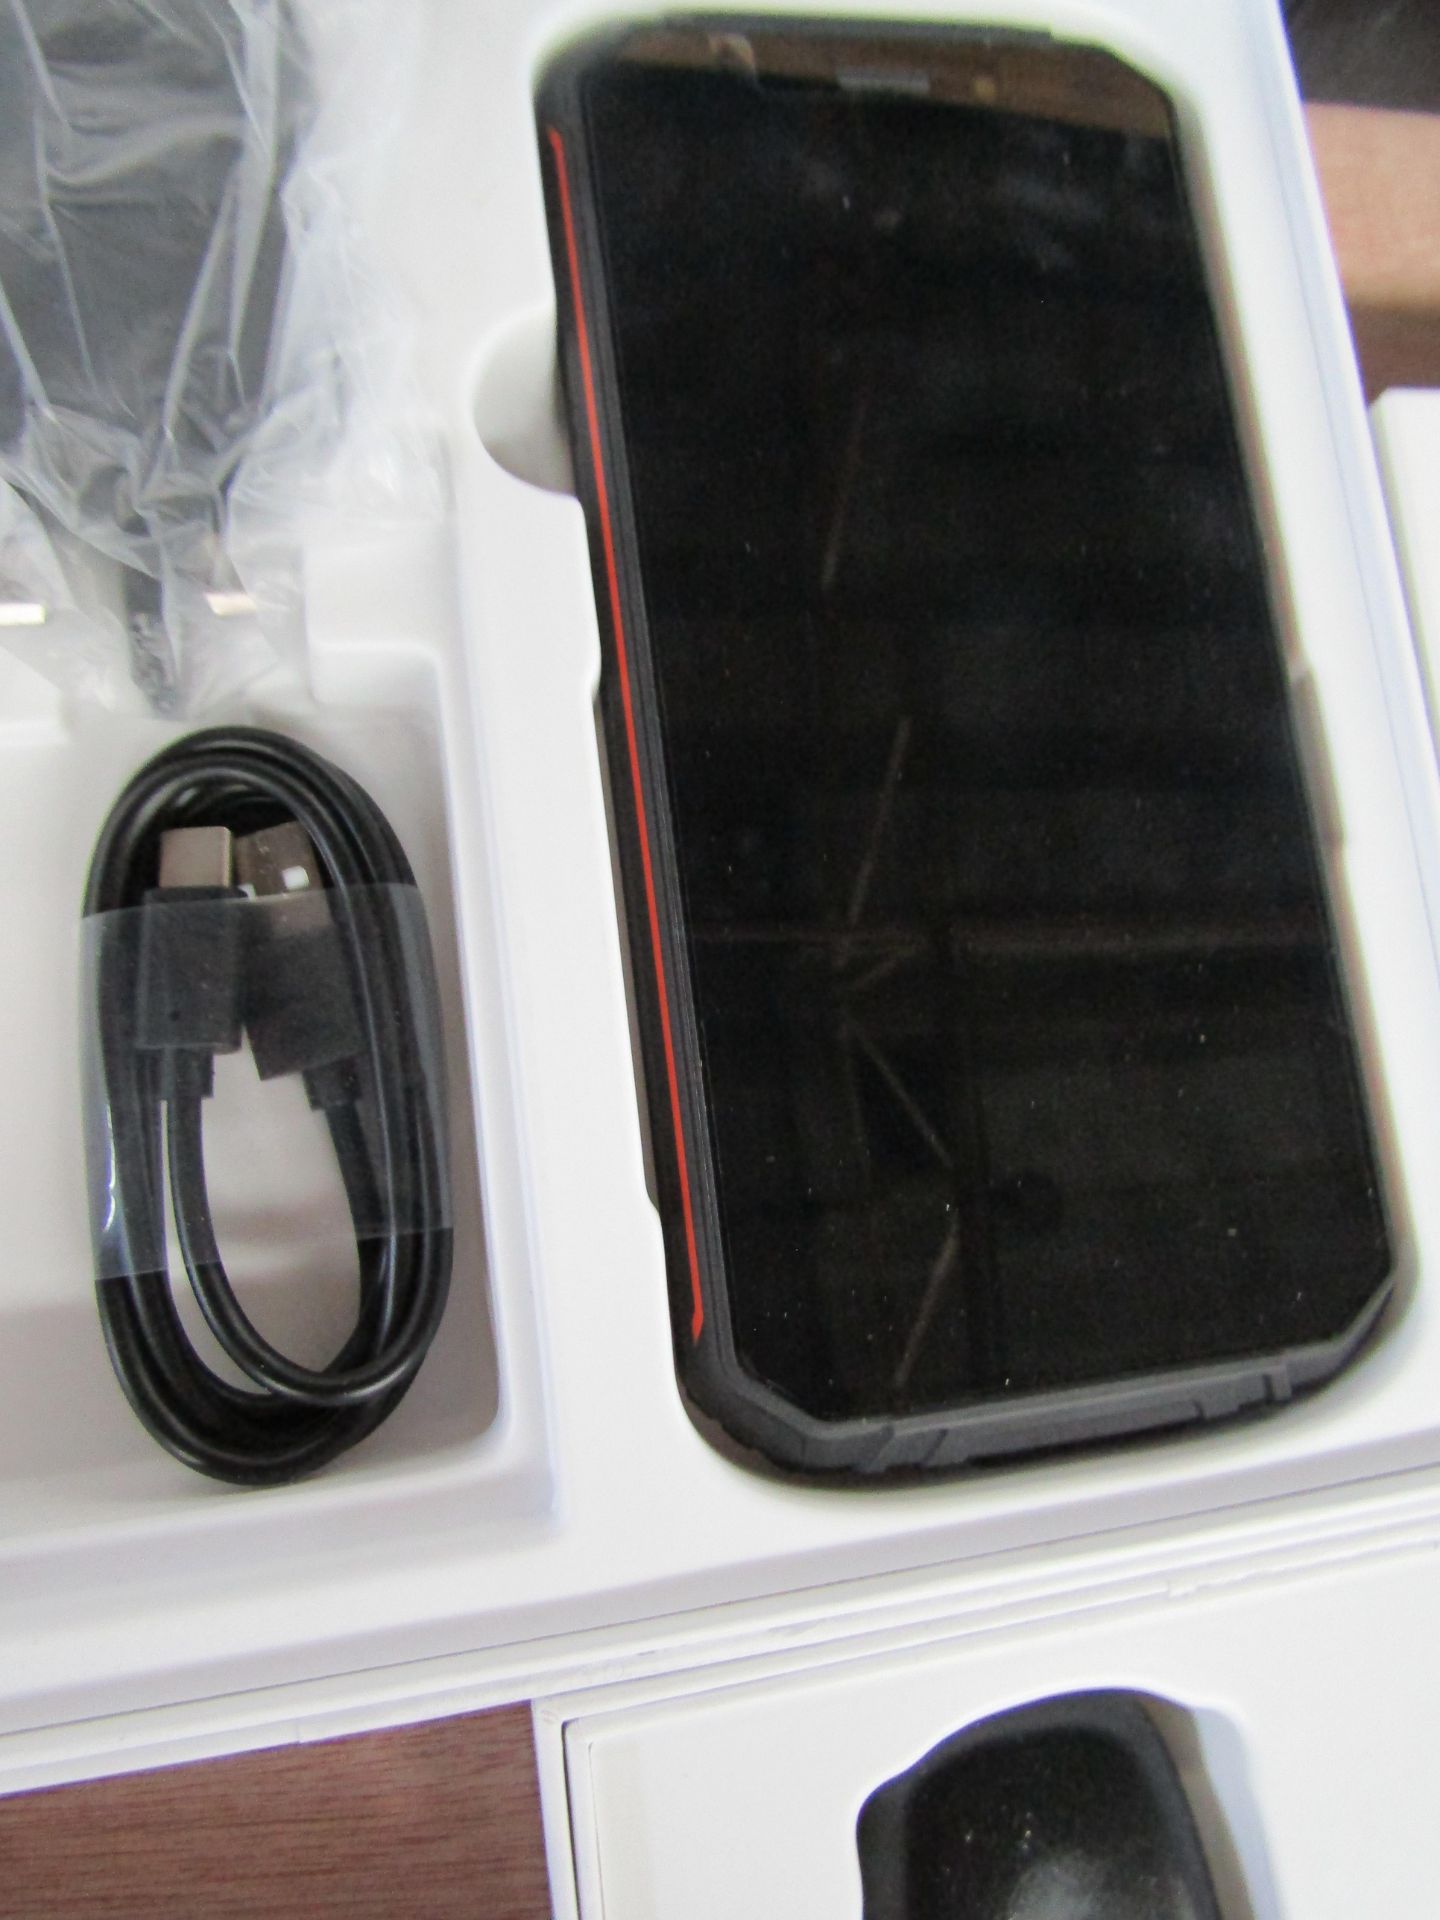 OUKITEL 12500mAh Battery Rugged Smartphone WP18 PRO, 13MP Dual Camera IP68 Waterproof Mobile